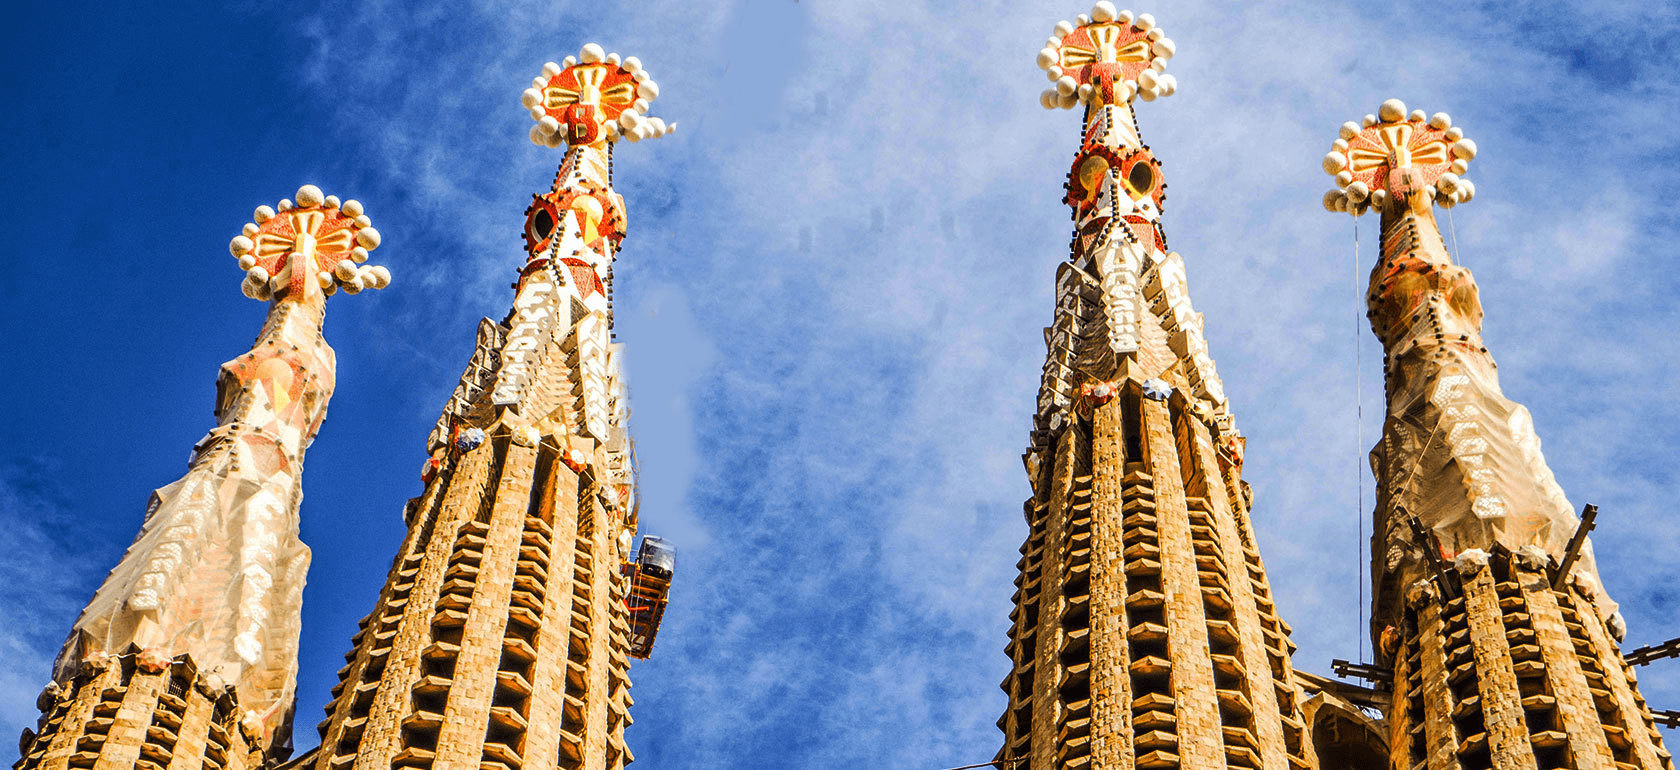 Sagrada Familia by Gaudi - Basilica in Barcelona, Spain - 137 Year Project 38